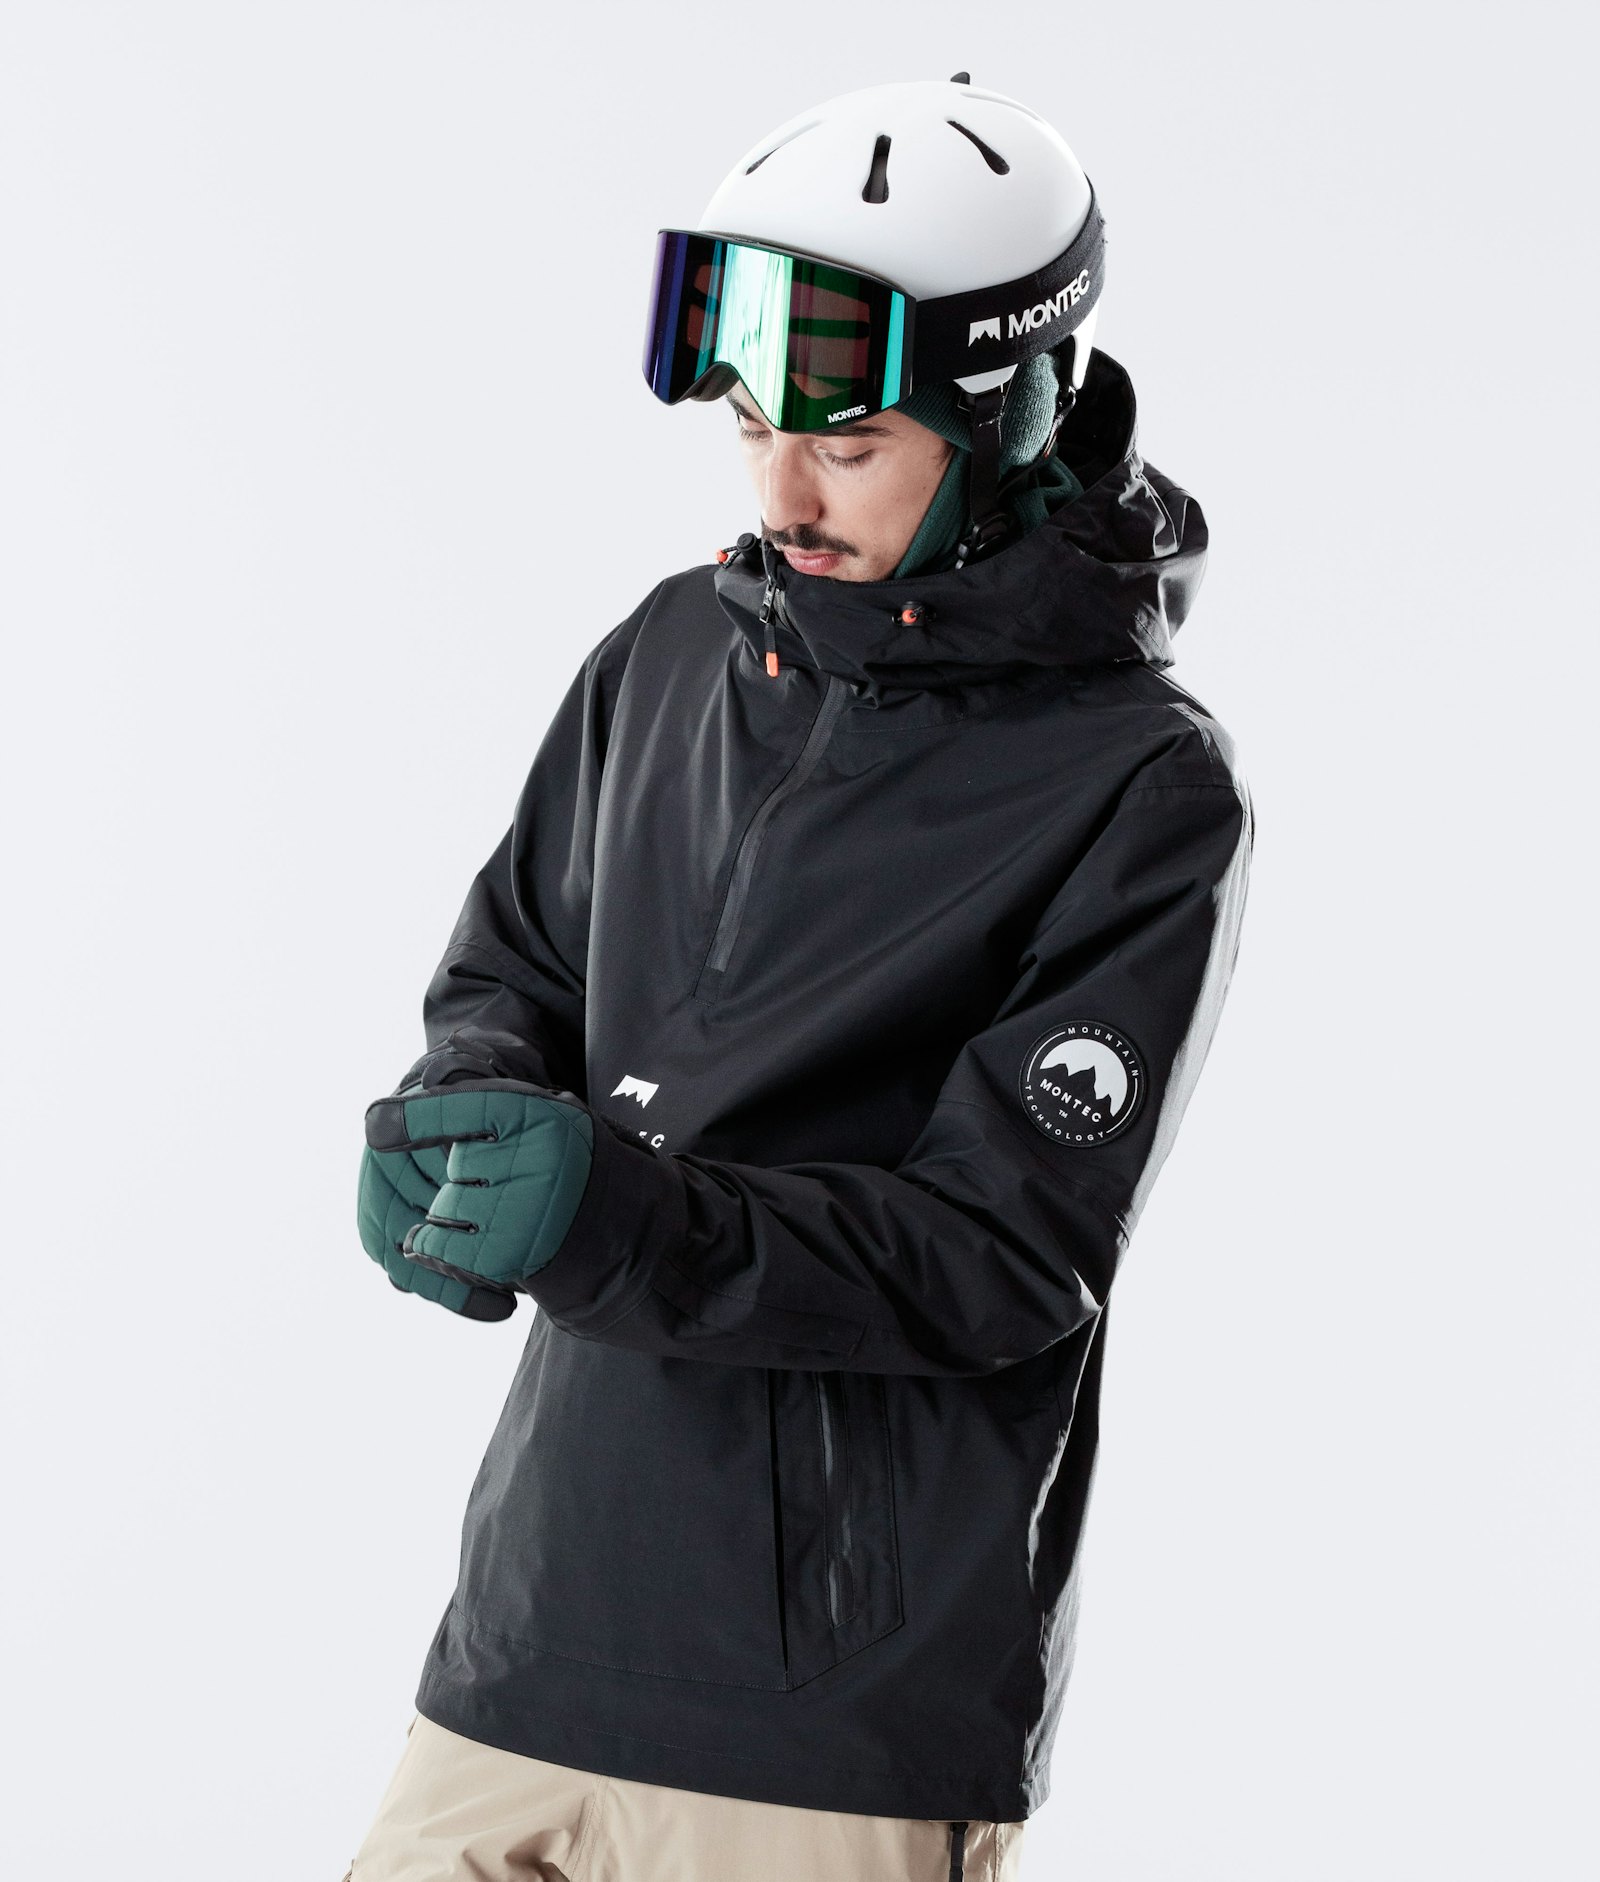 Typhoon 2020 Ski jas Heren Black